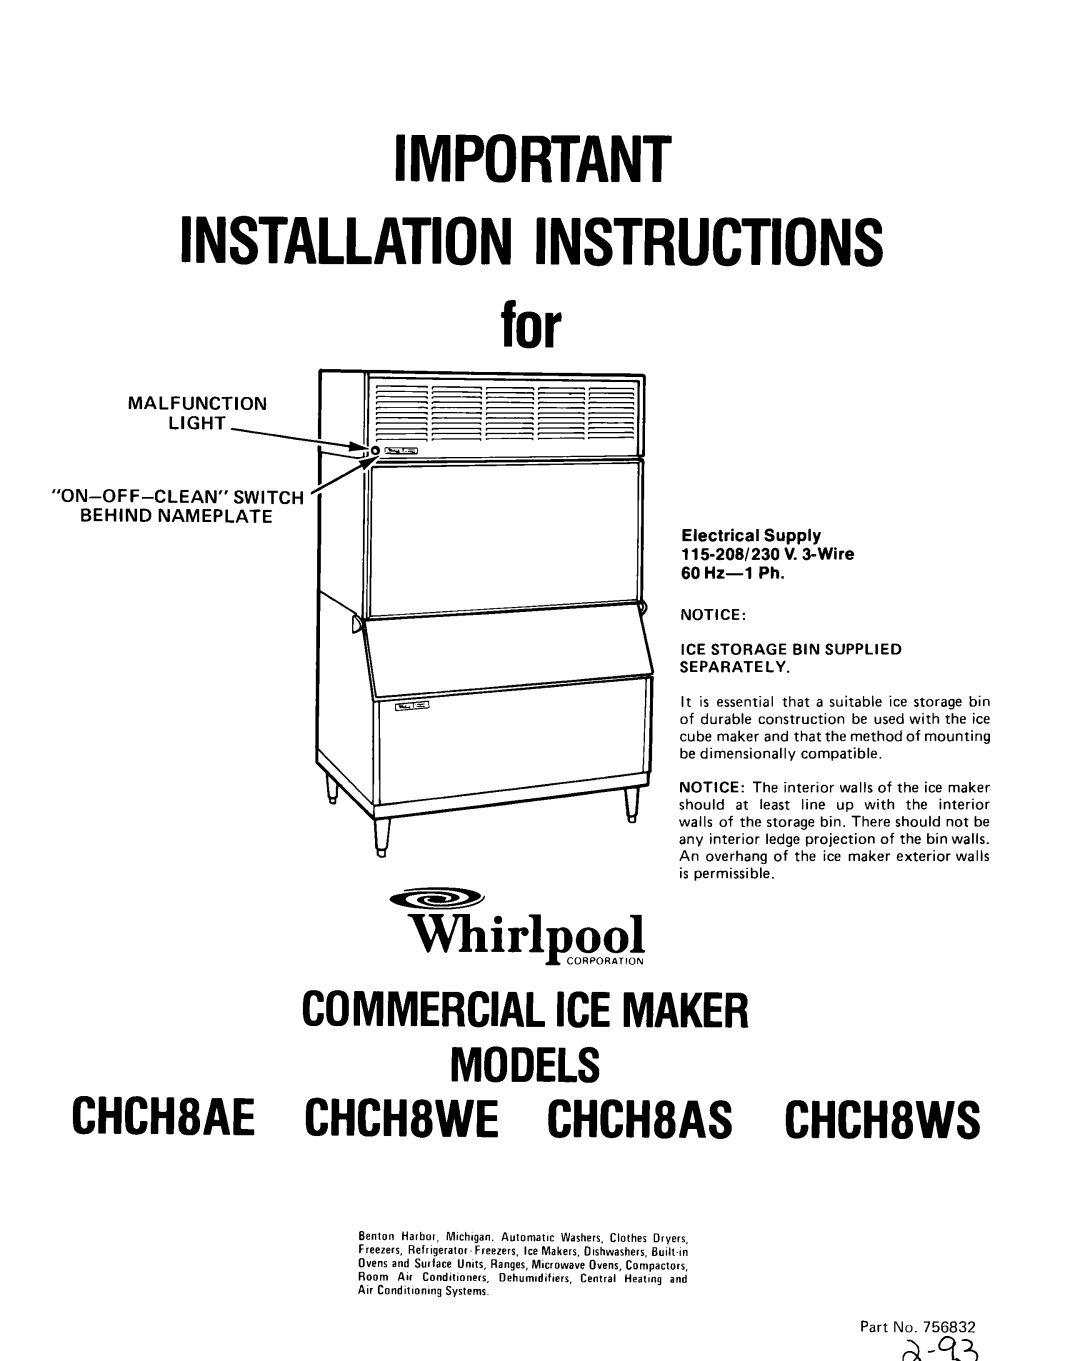 Whirlpool installation instructions Commercialicemaker Models, CHCH8AECHCH8WECHCH8AS CHCH8WS, Whirlpoo 